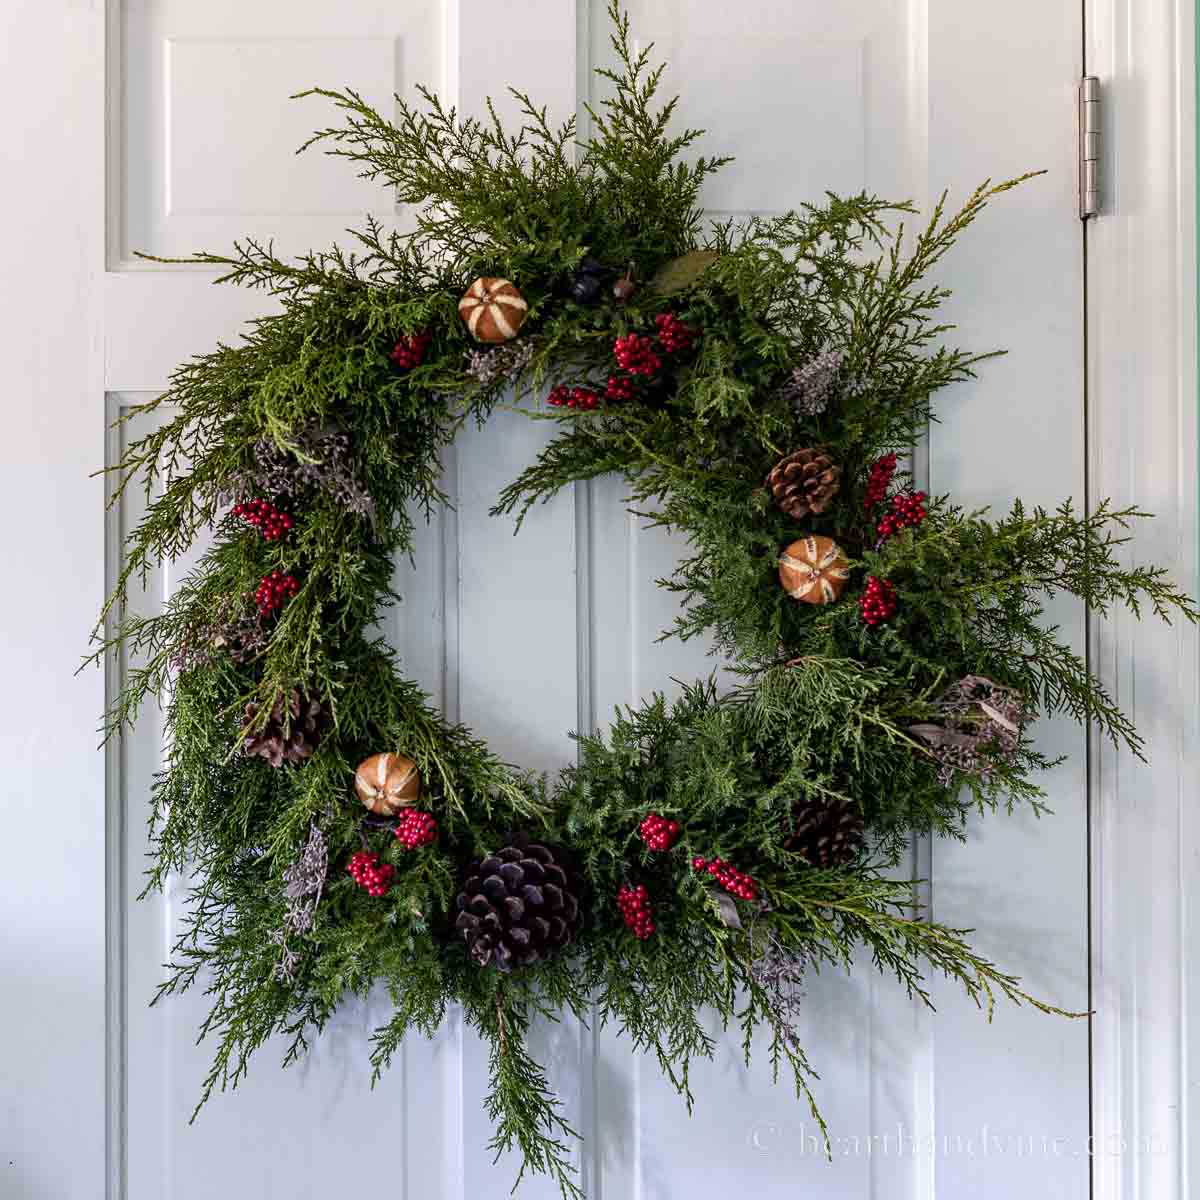 Evergreen wreath on a white door.